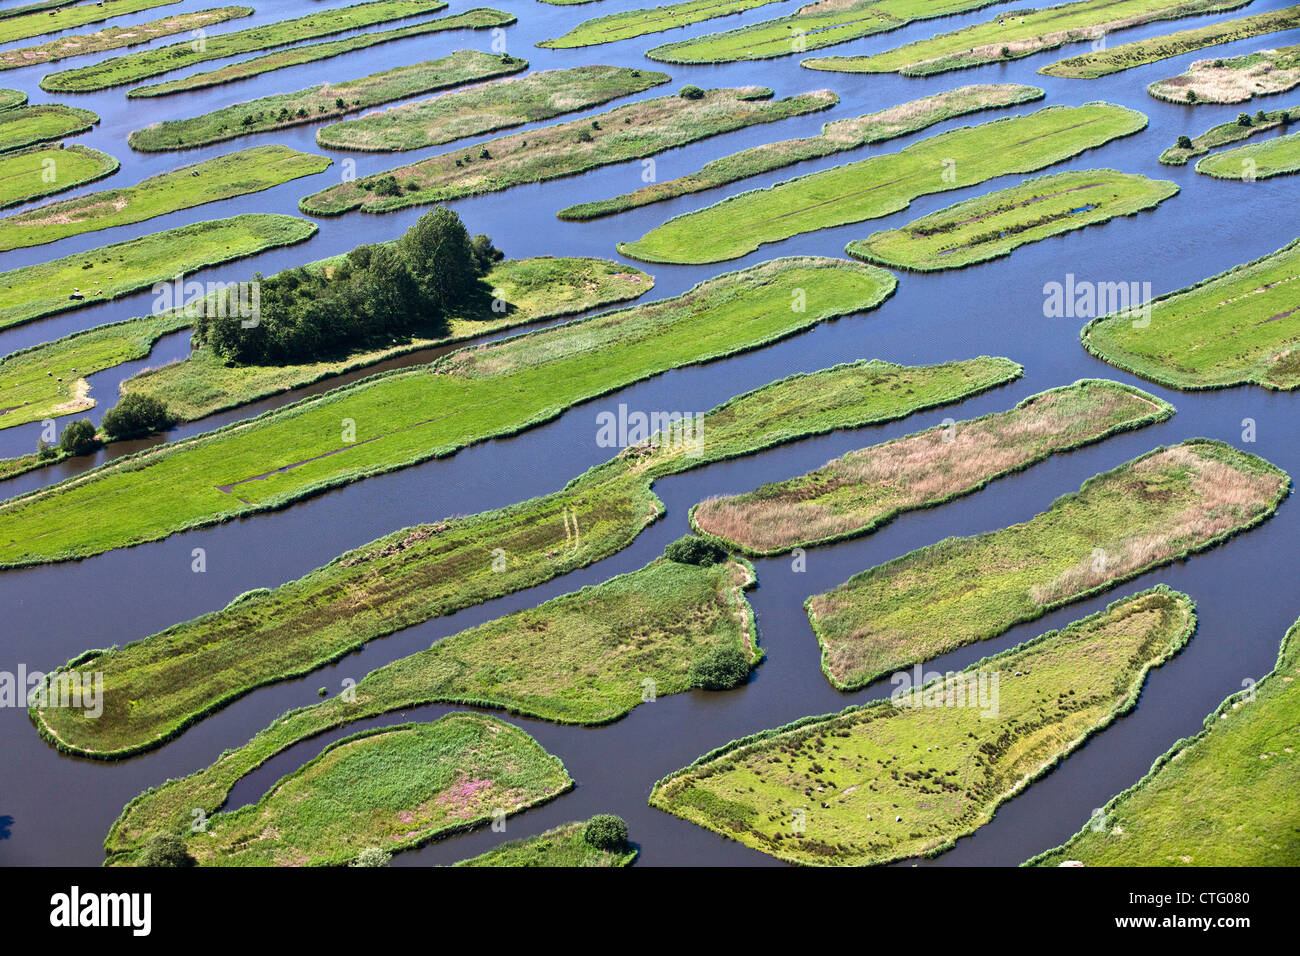 The Netherlands, Jisp, Aerial, Polder landscape. Stock Photo